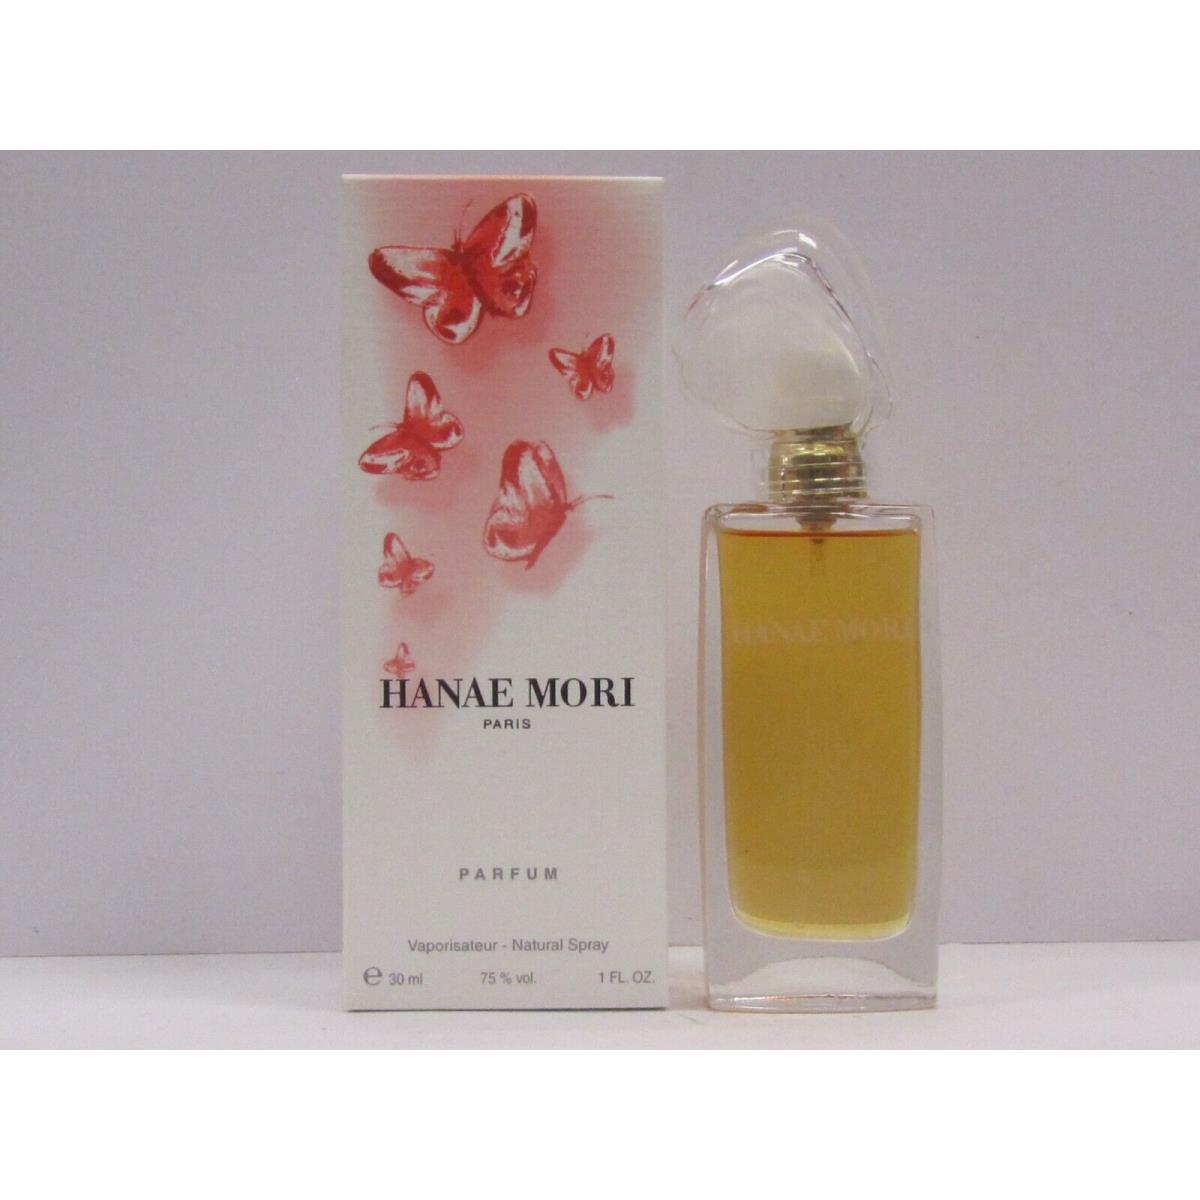 Hanae Mori by Hanae Mori For Women 1 oz Parfum Spray